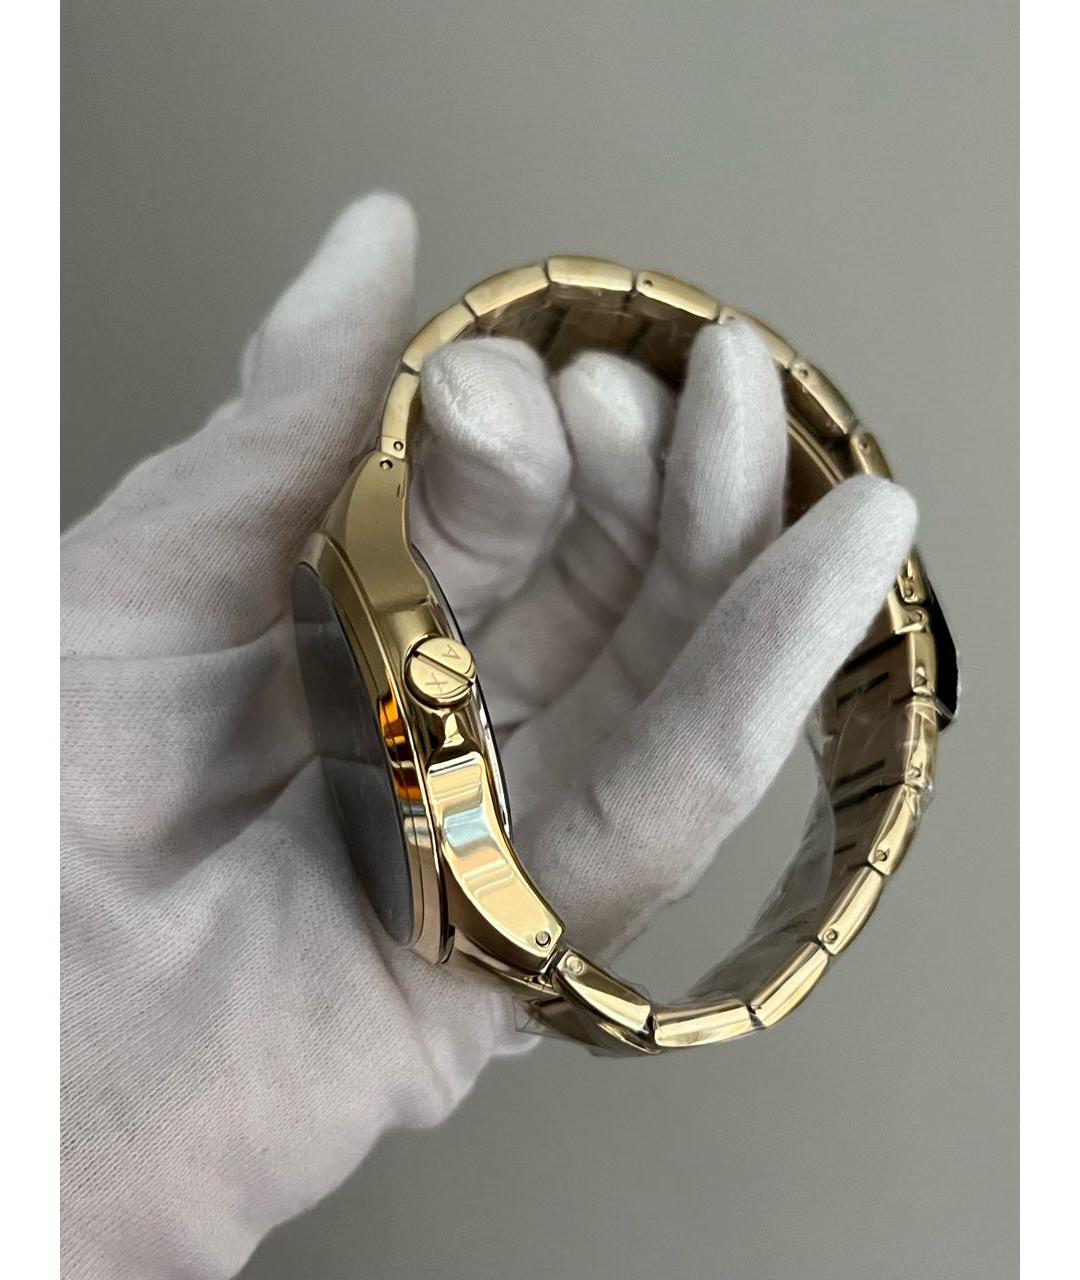 ARMANI EXCHANGE Золотые стальные часы, фото 4